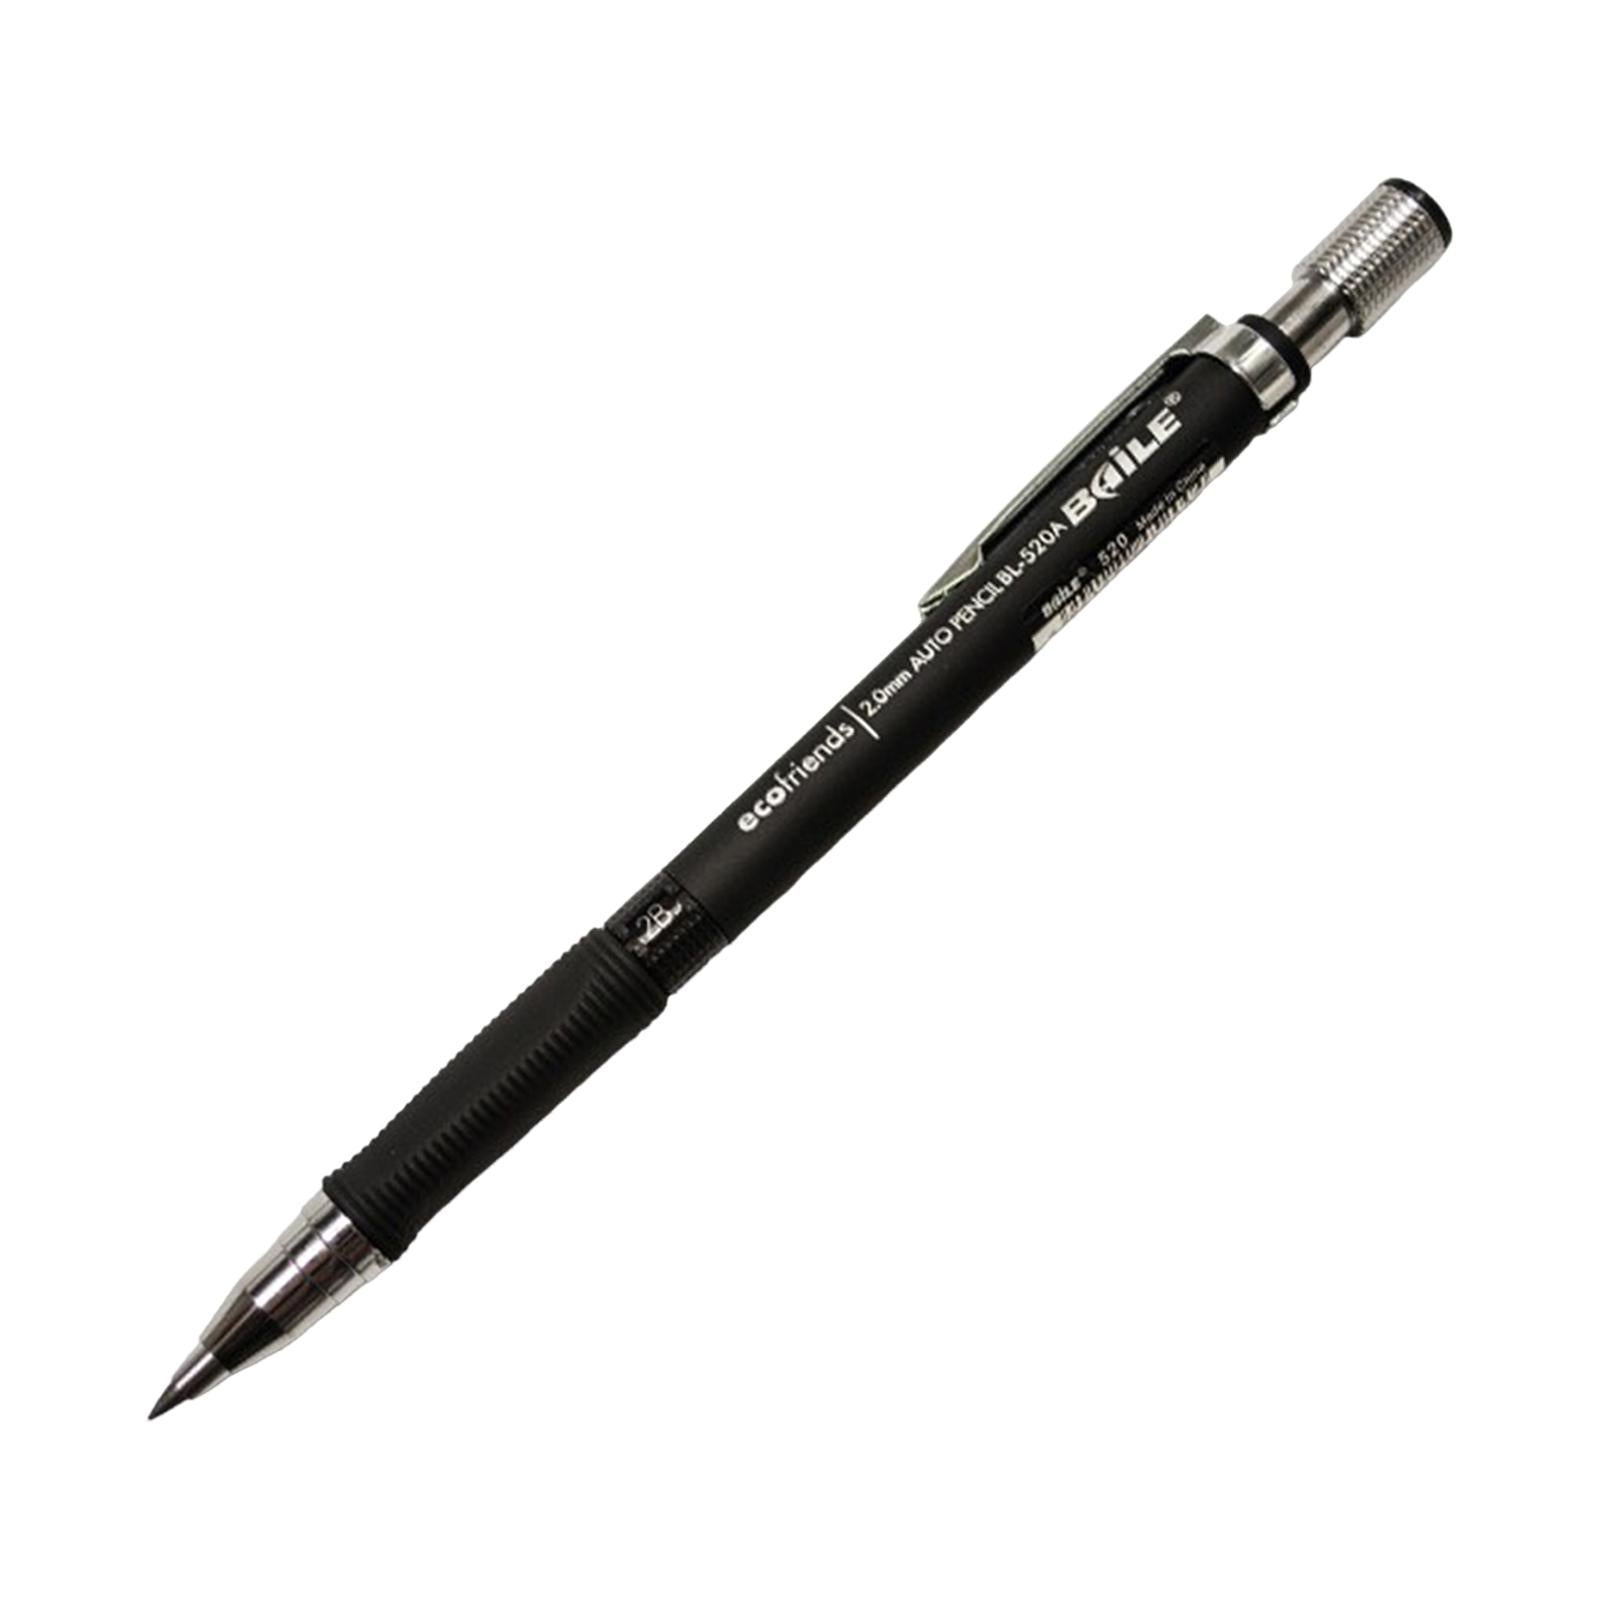 Art Painting Pencils Portable Drafting Pencil for Drafting Writing Sketching Black